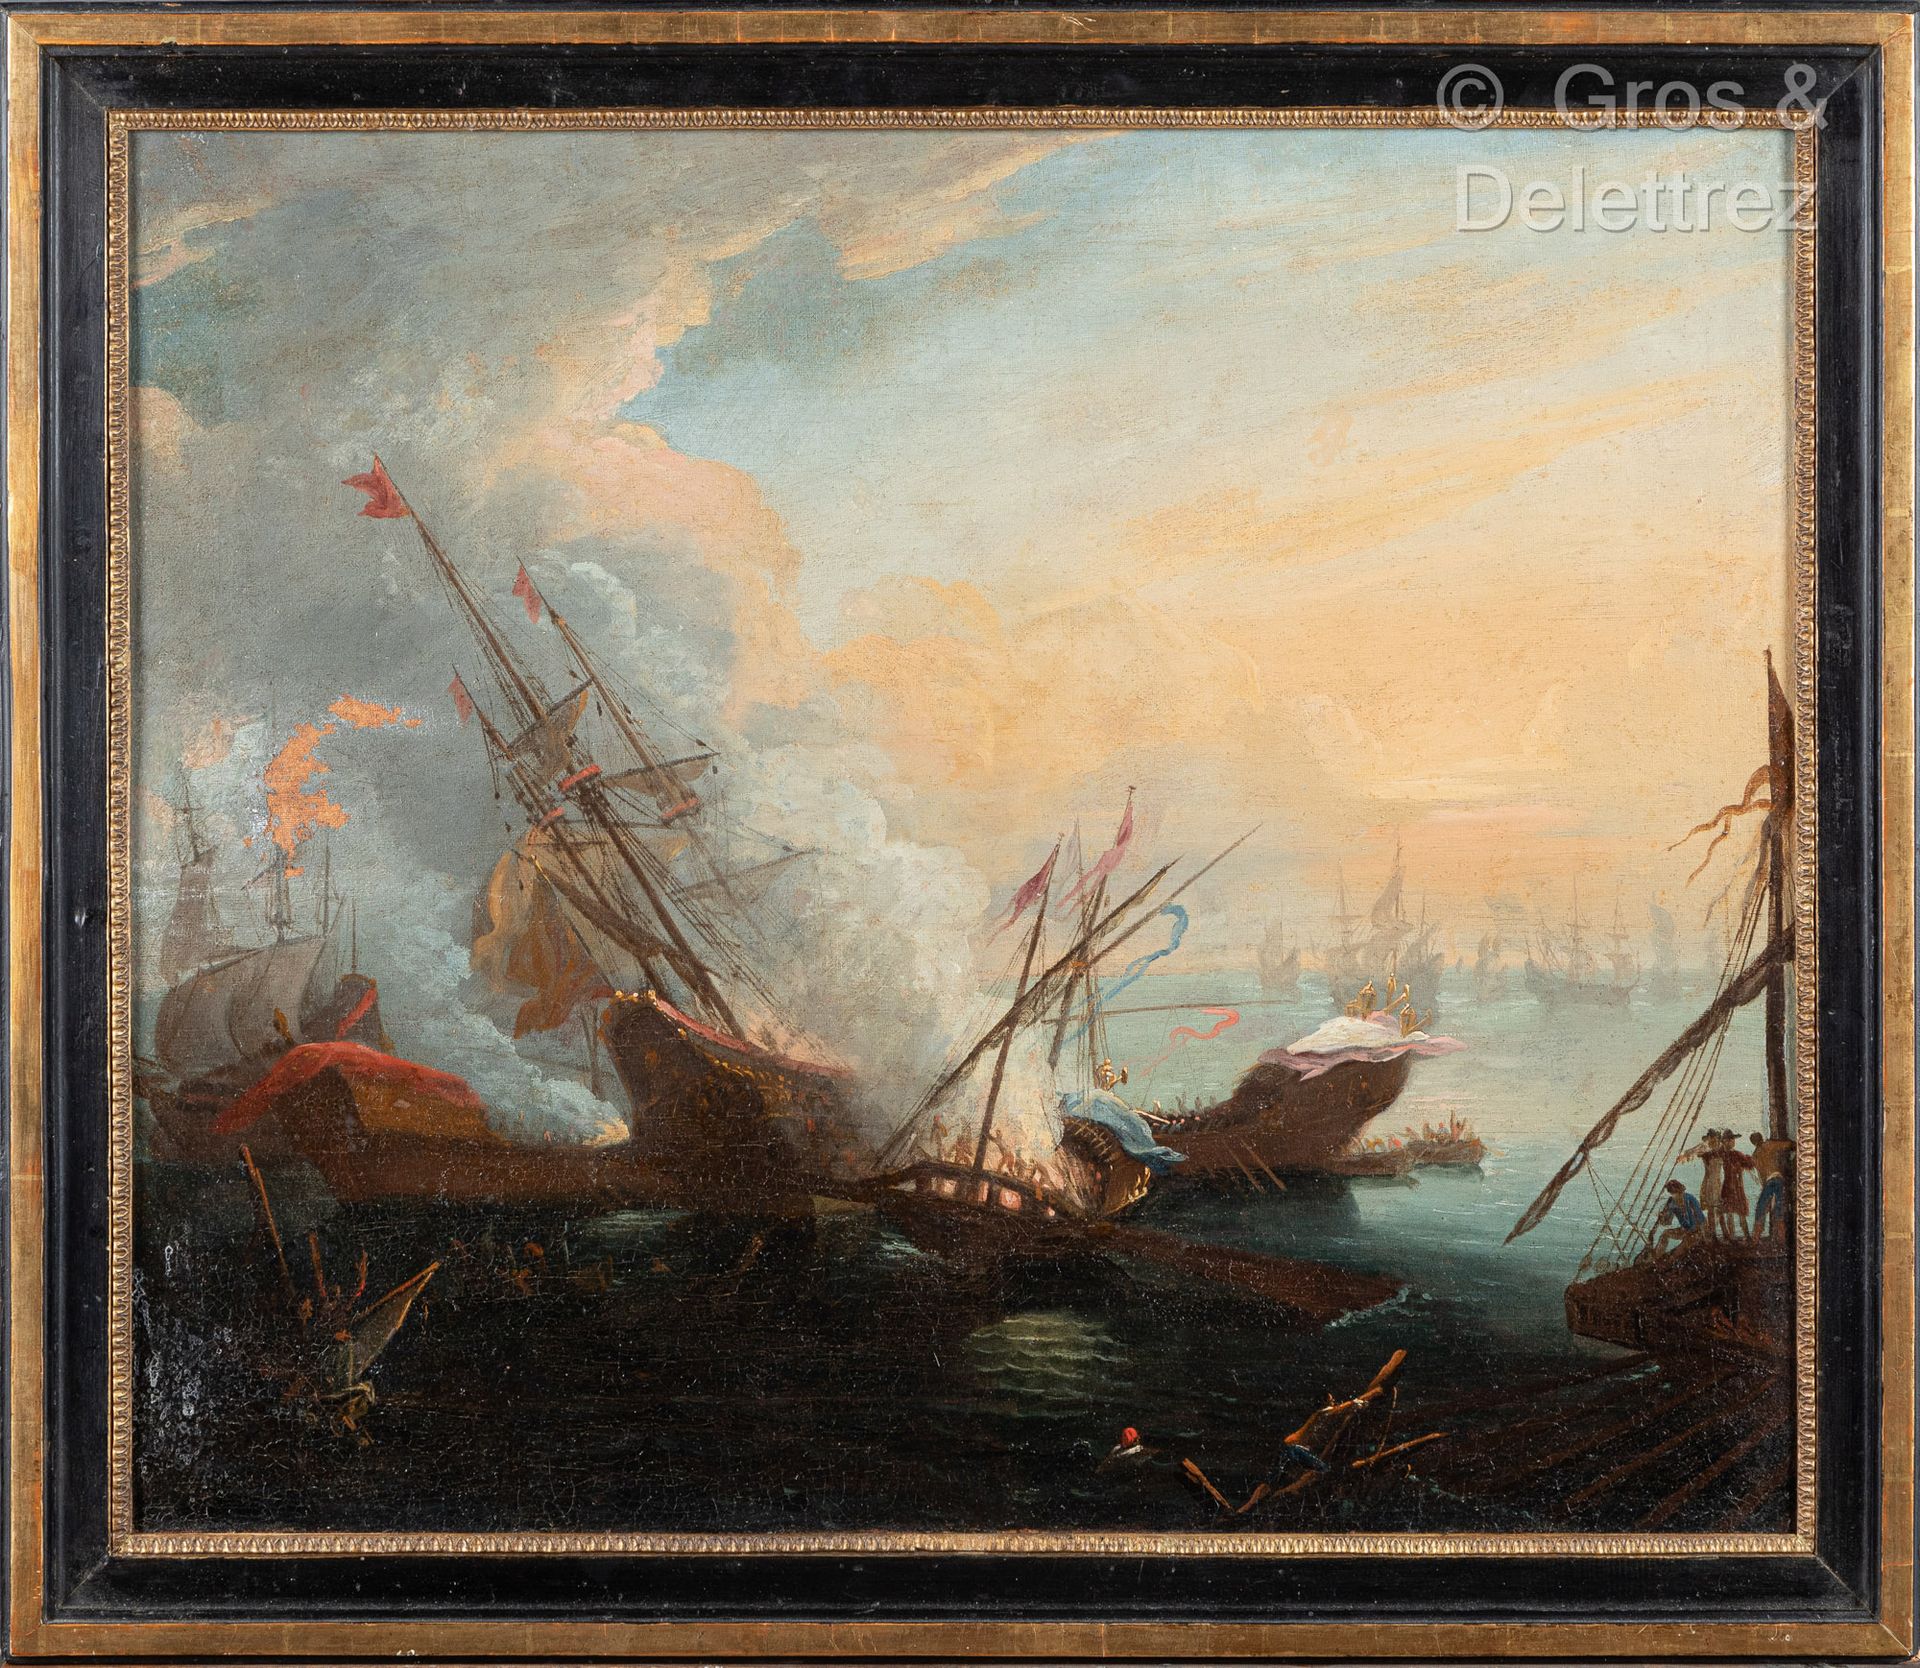 Null 18th century school
Naval battle
Oil on canvas
48 x 55 cm. Dent